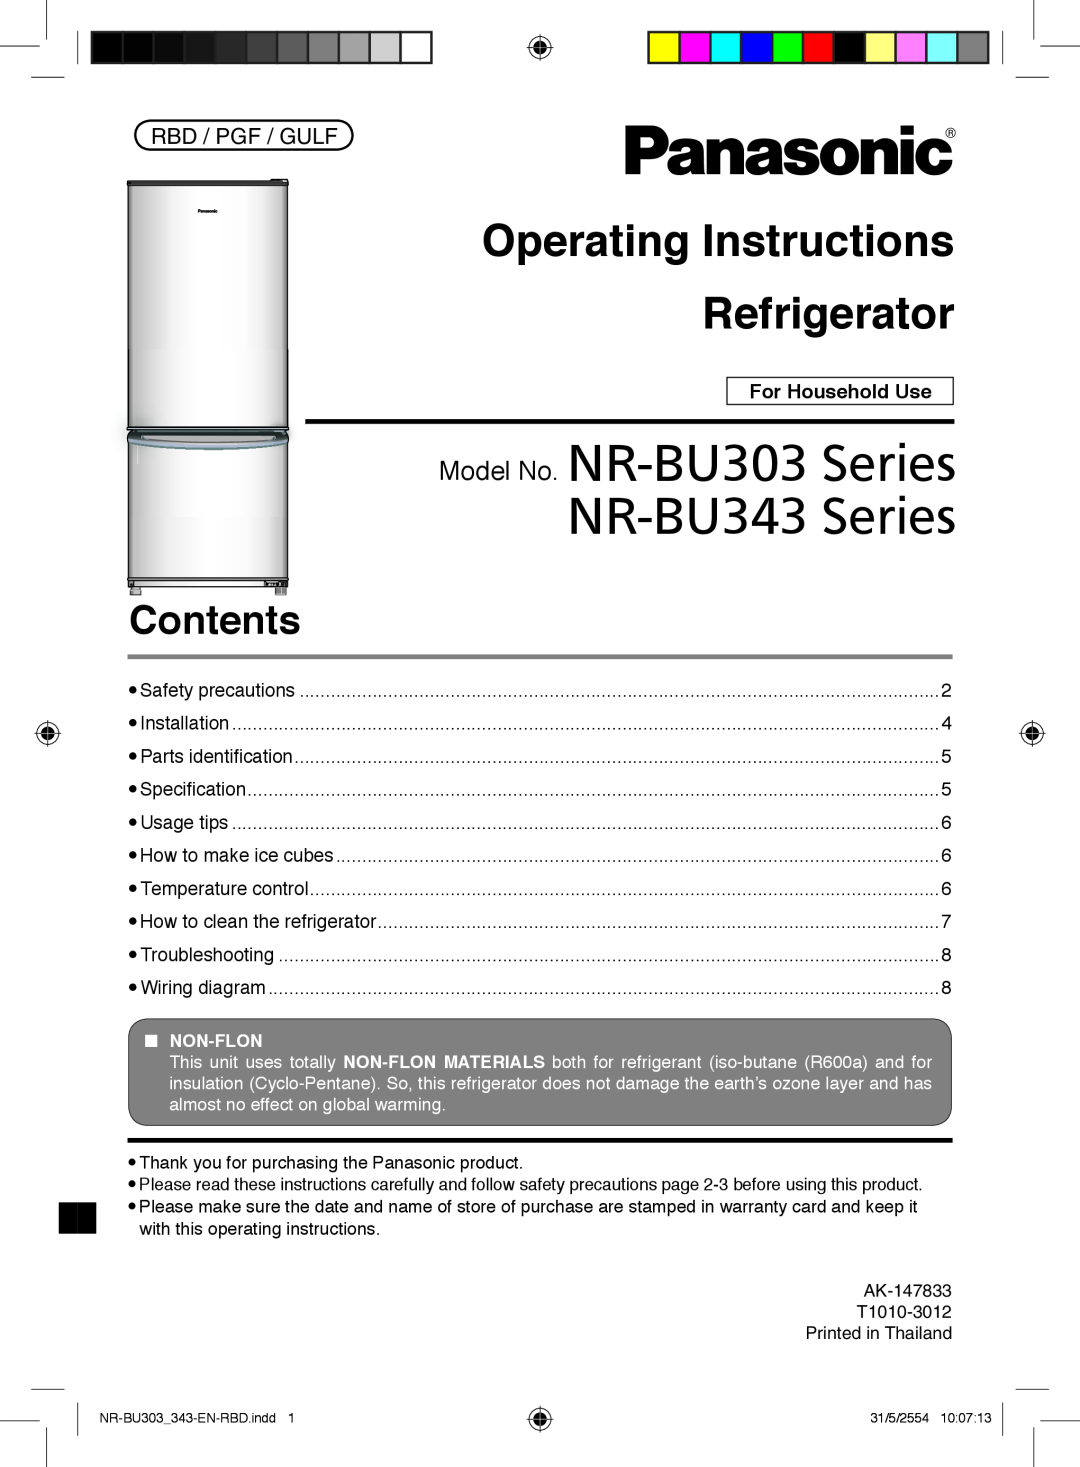 Panasonic NR-BU343 warranty For Household Use, Operating Instructions, Refrigerator, Model No. NR-BU303Series, Contents 